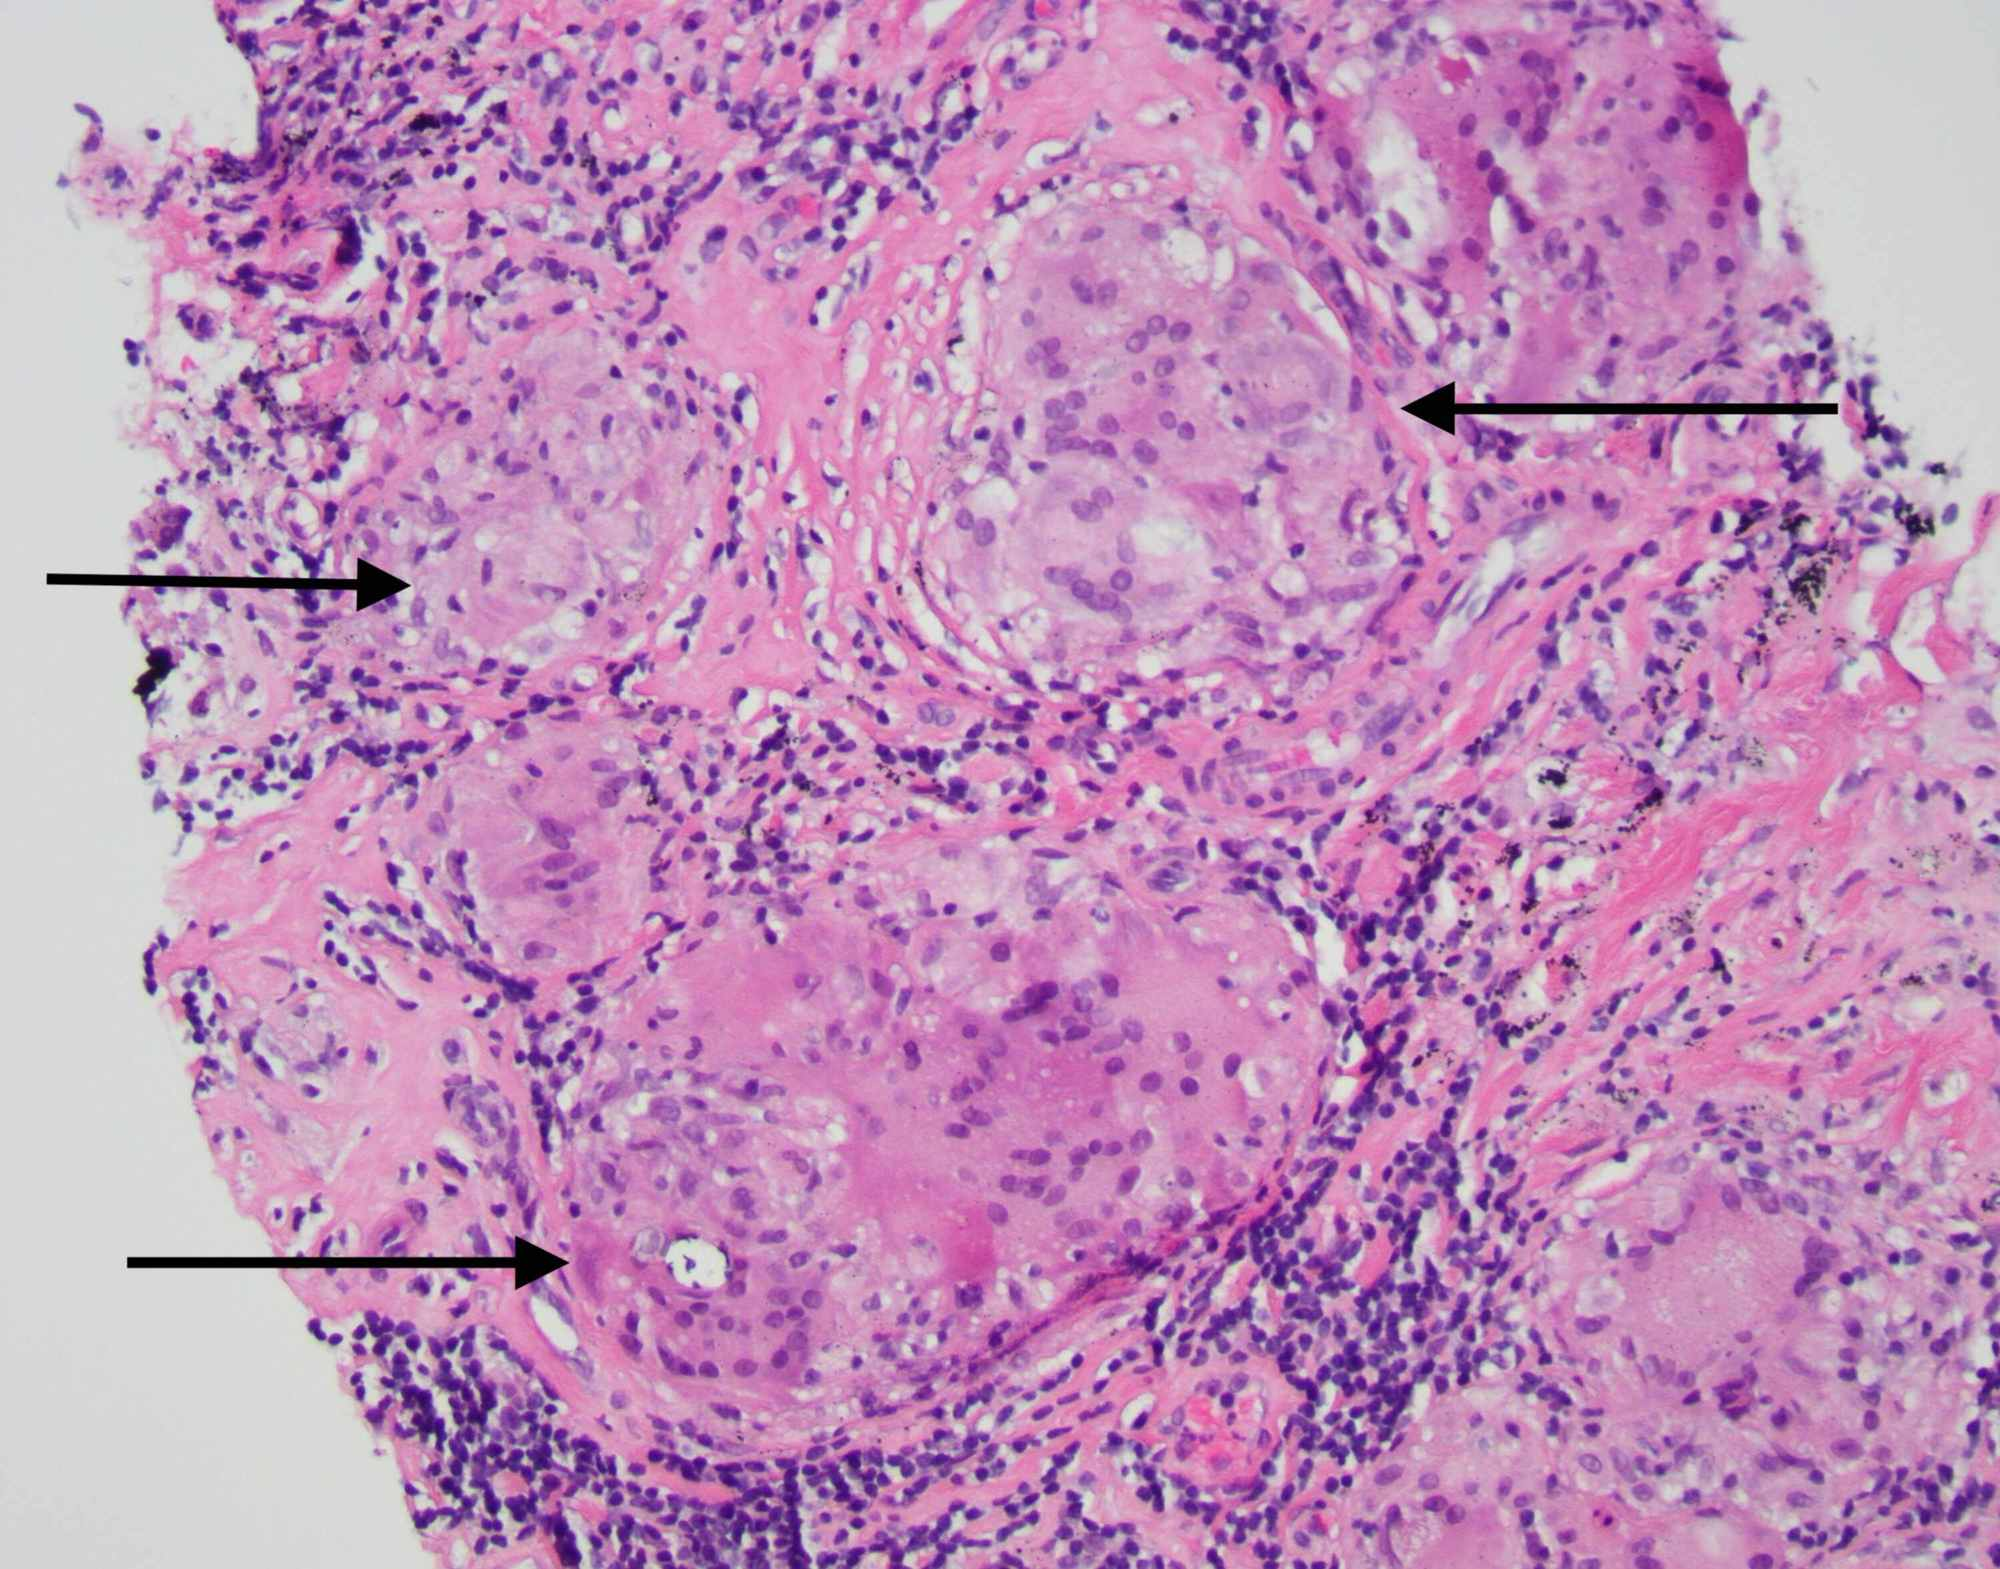 pathological lymph node